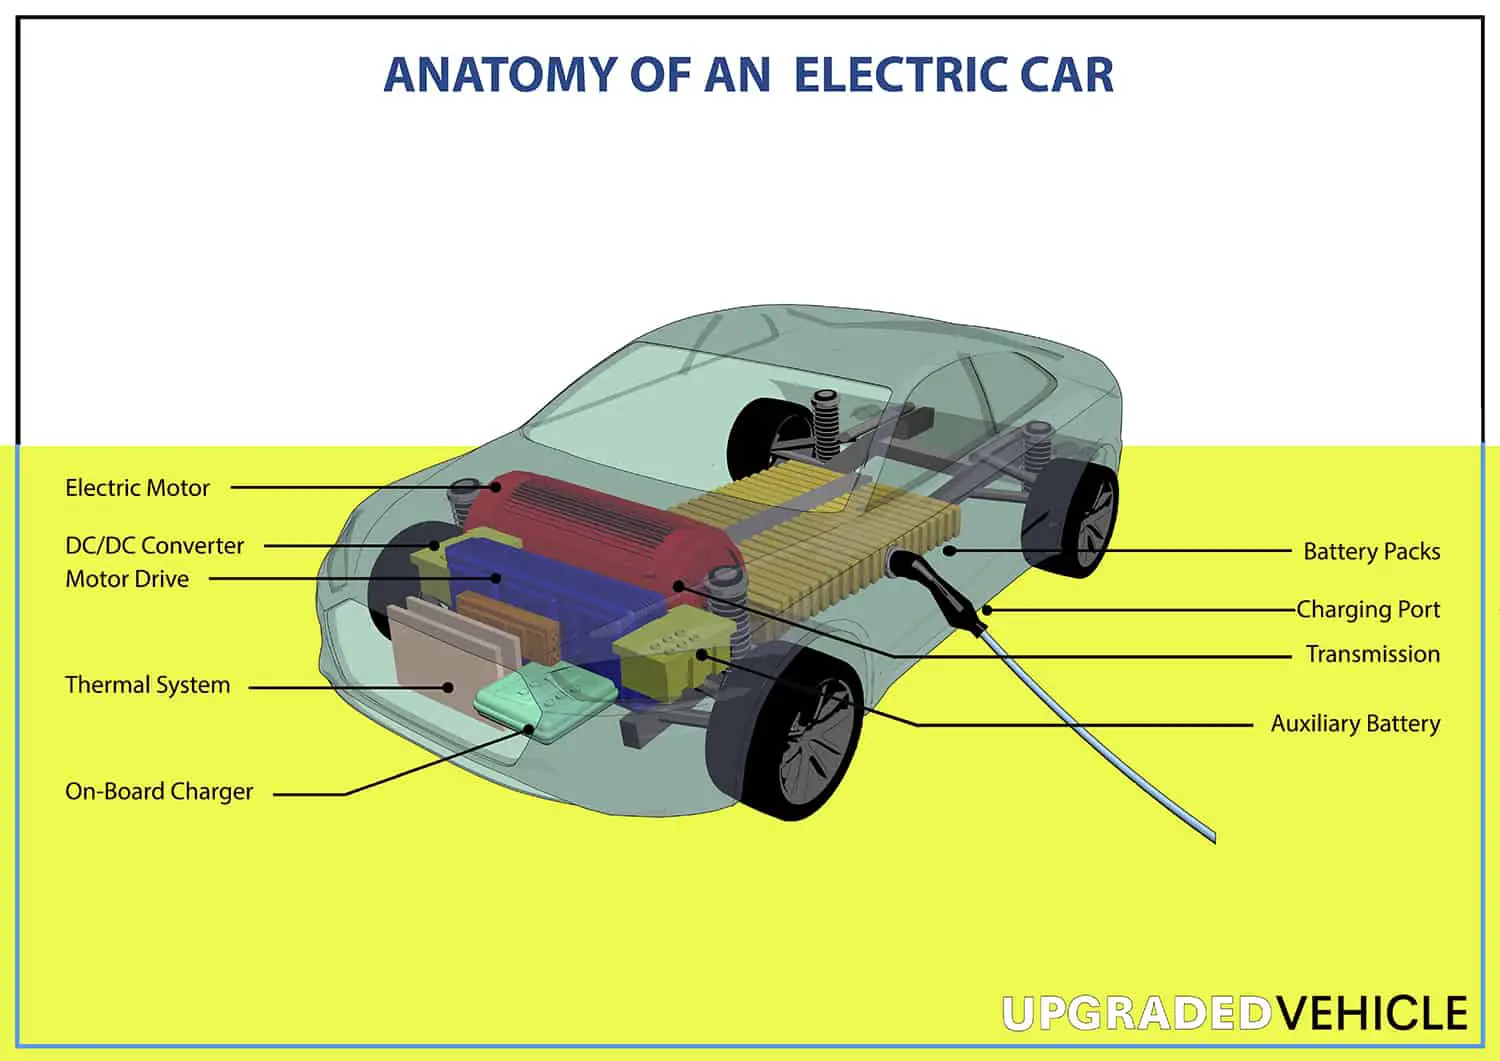 Anatomy of an electric car